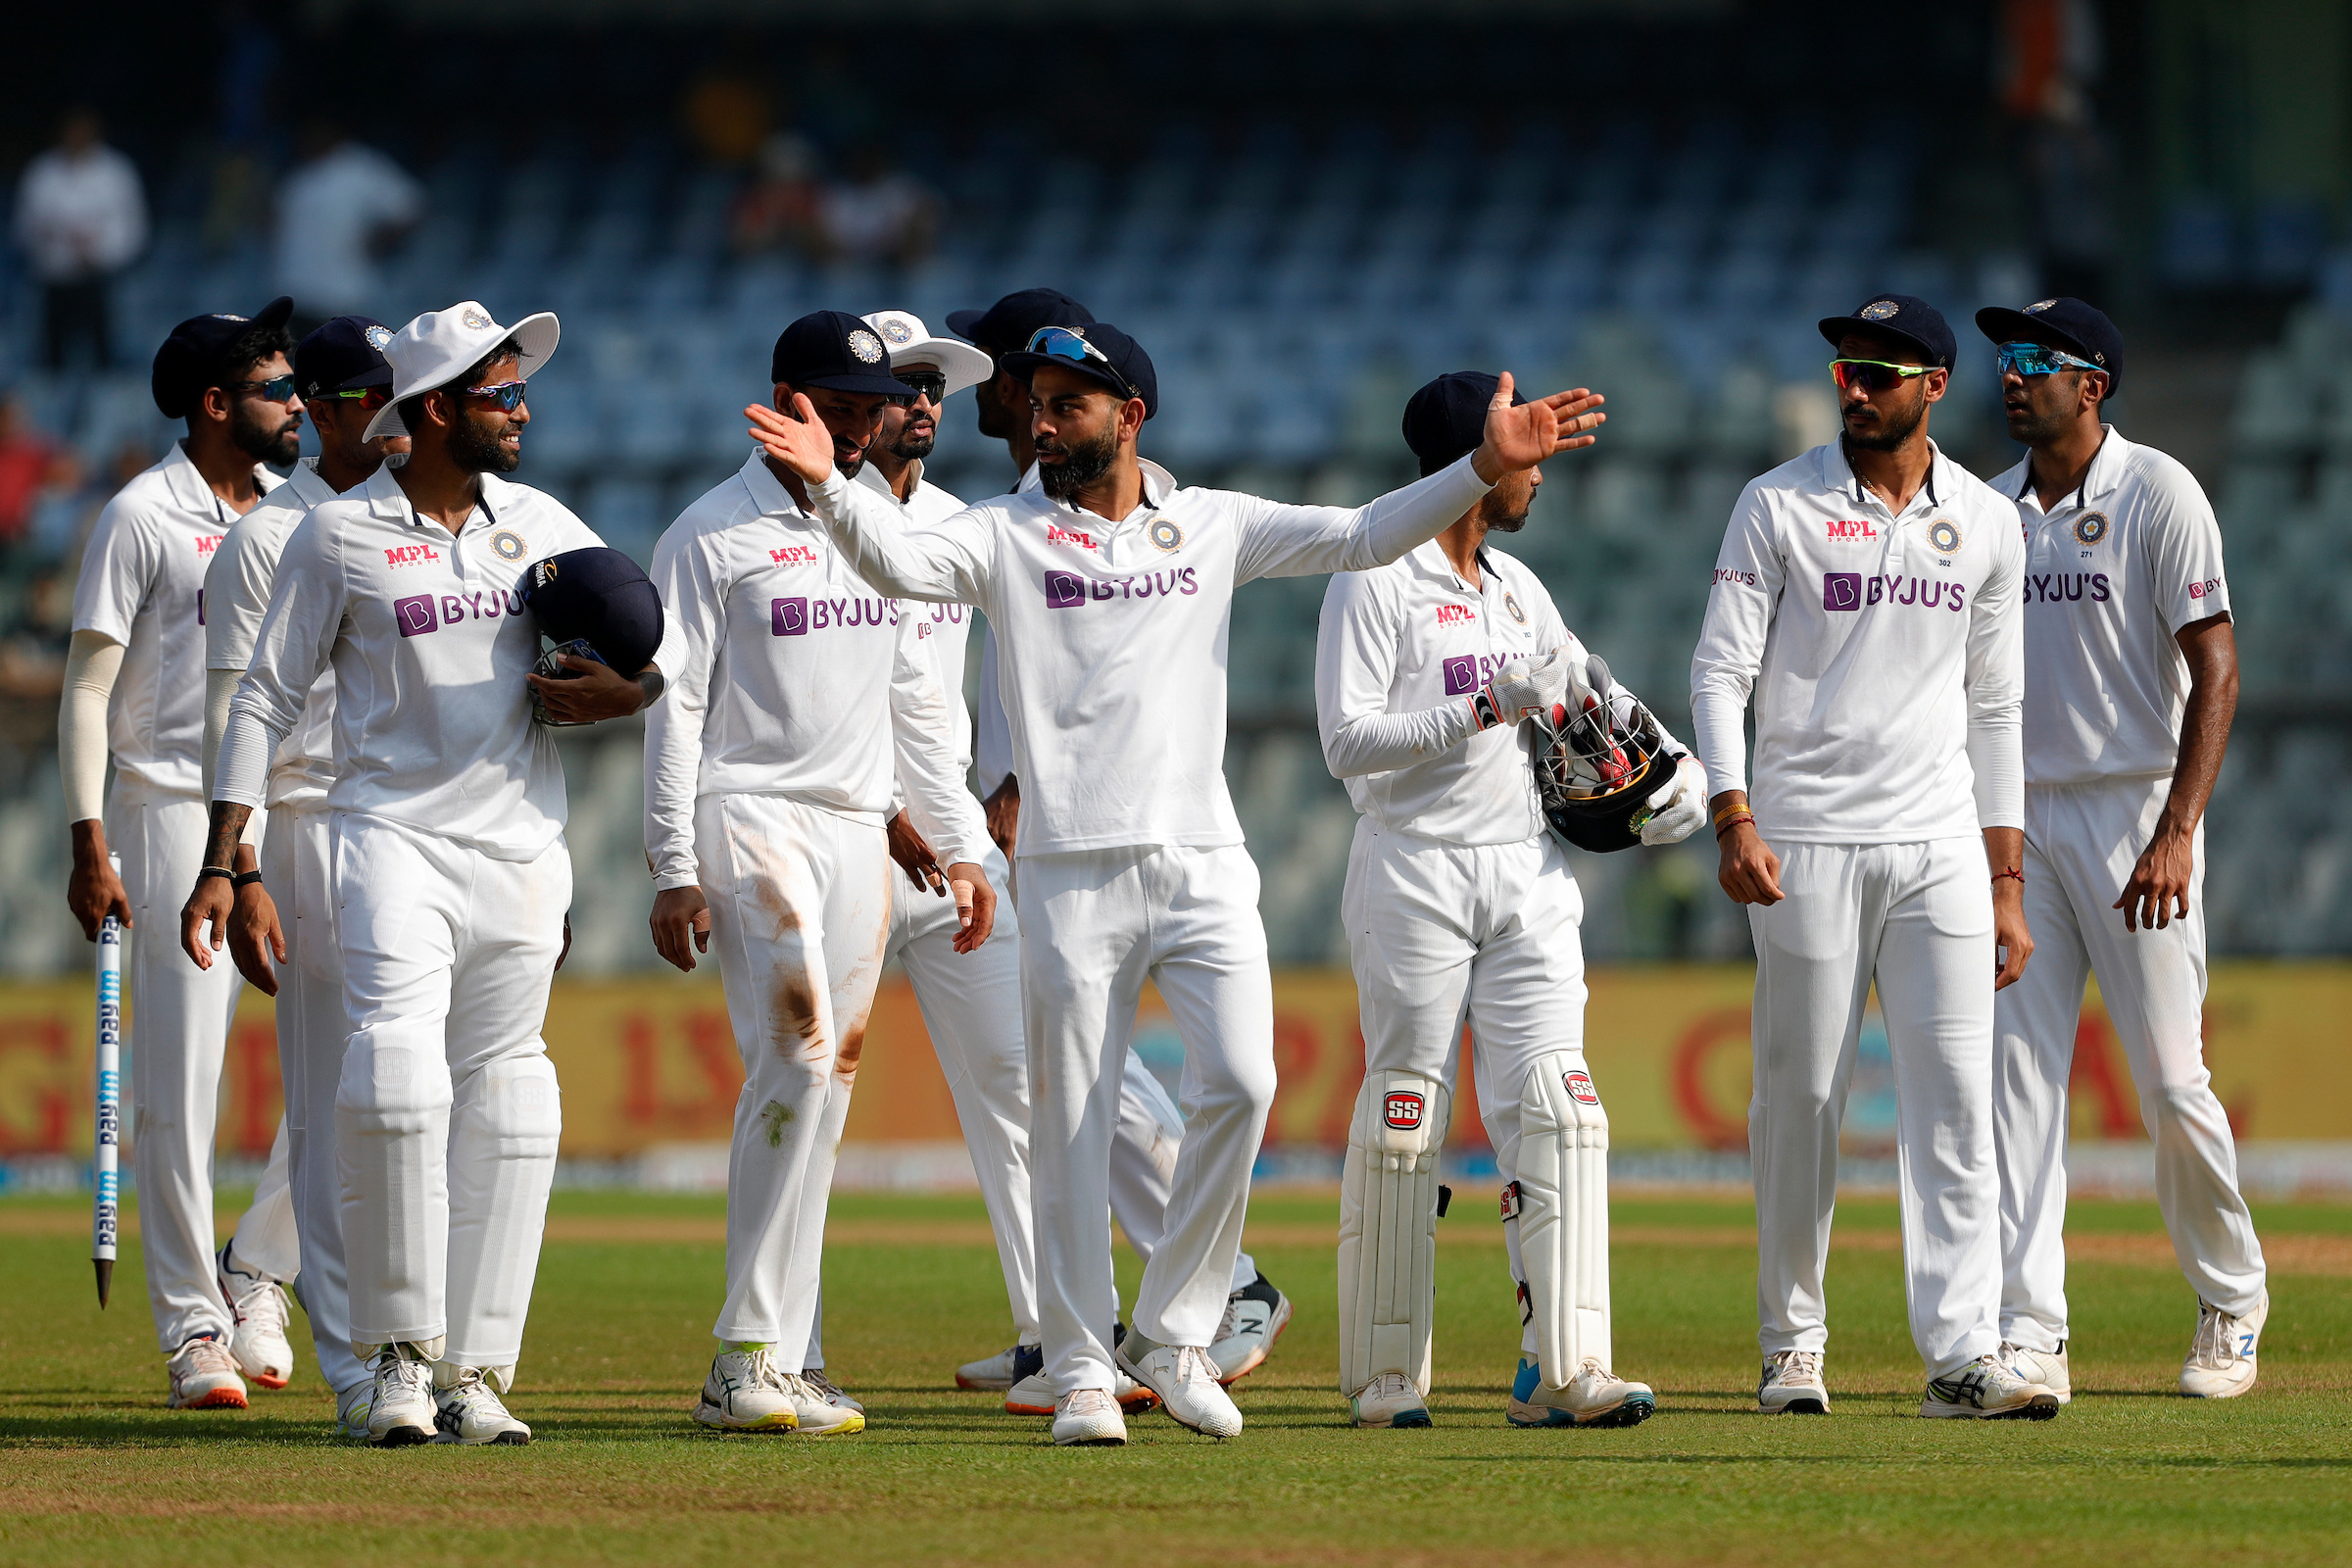 India registered big win over New Zealand in Mumbai | BCCI